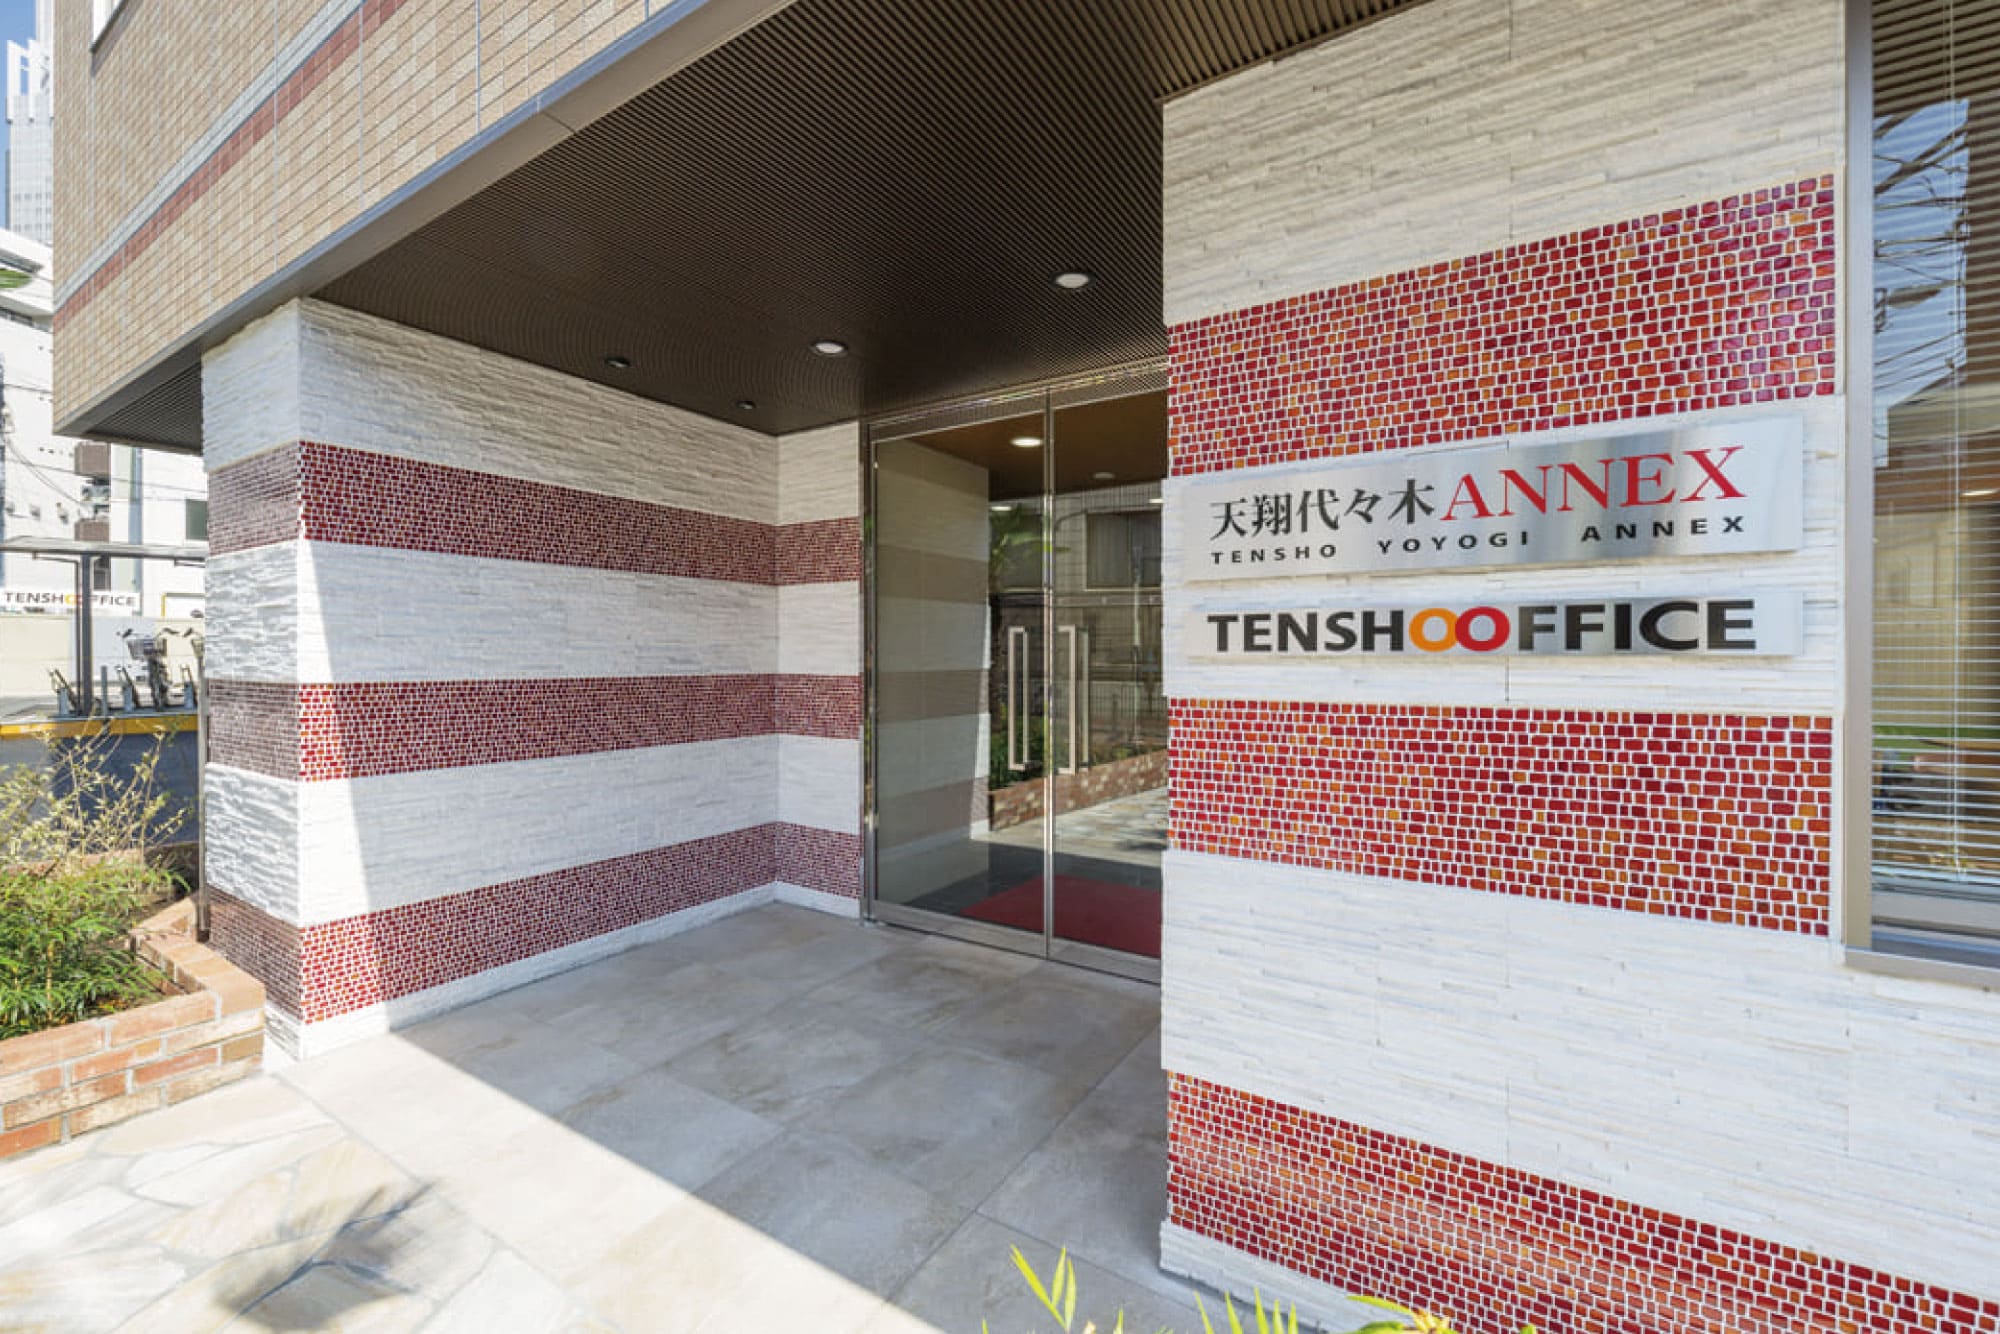 Entrance - TENSHO OFFICE Yoyogi ANNEX